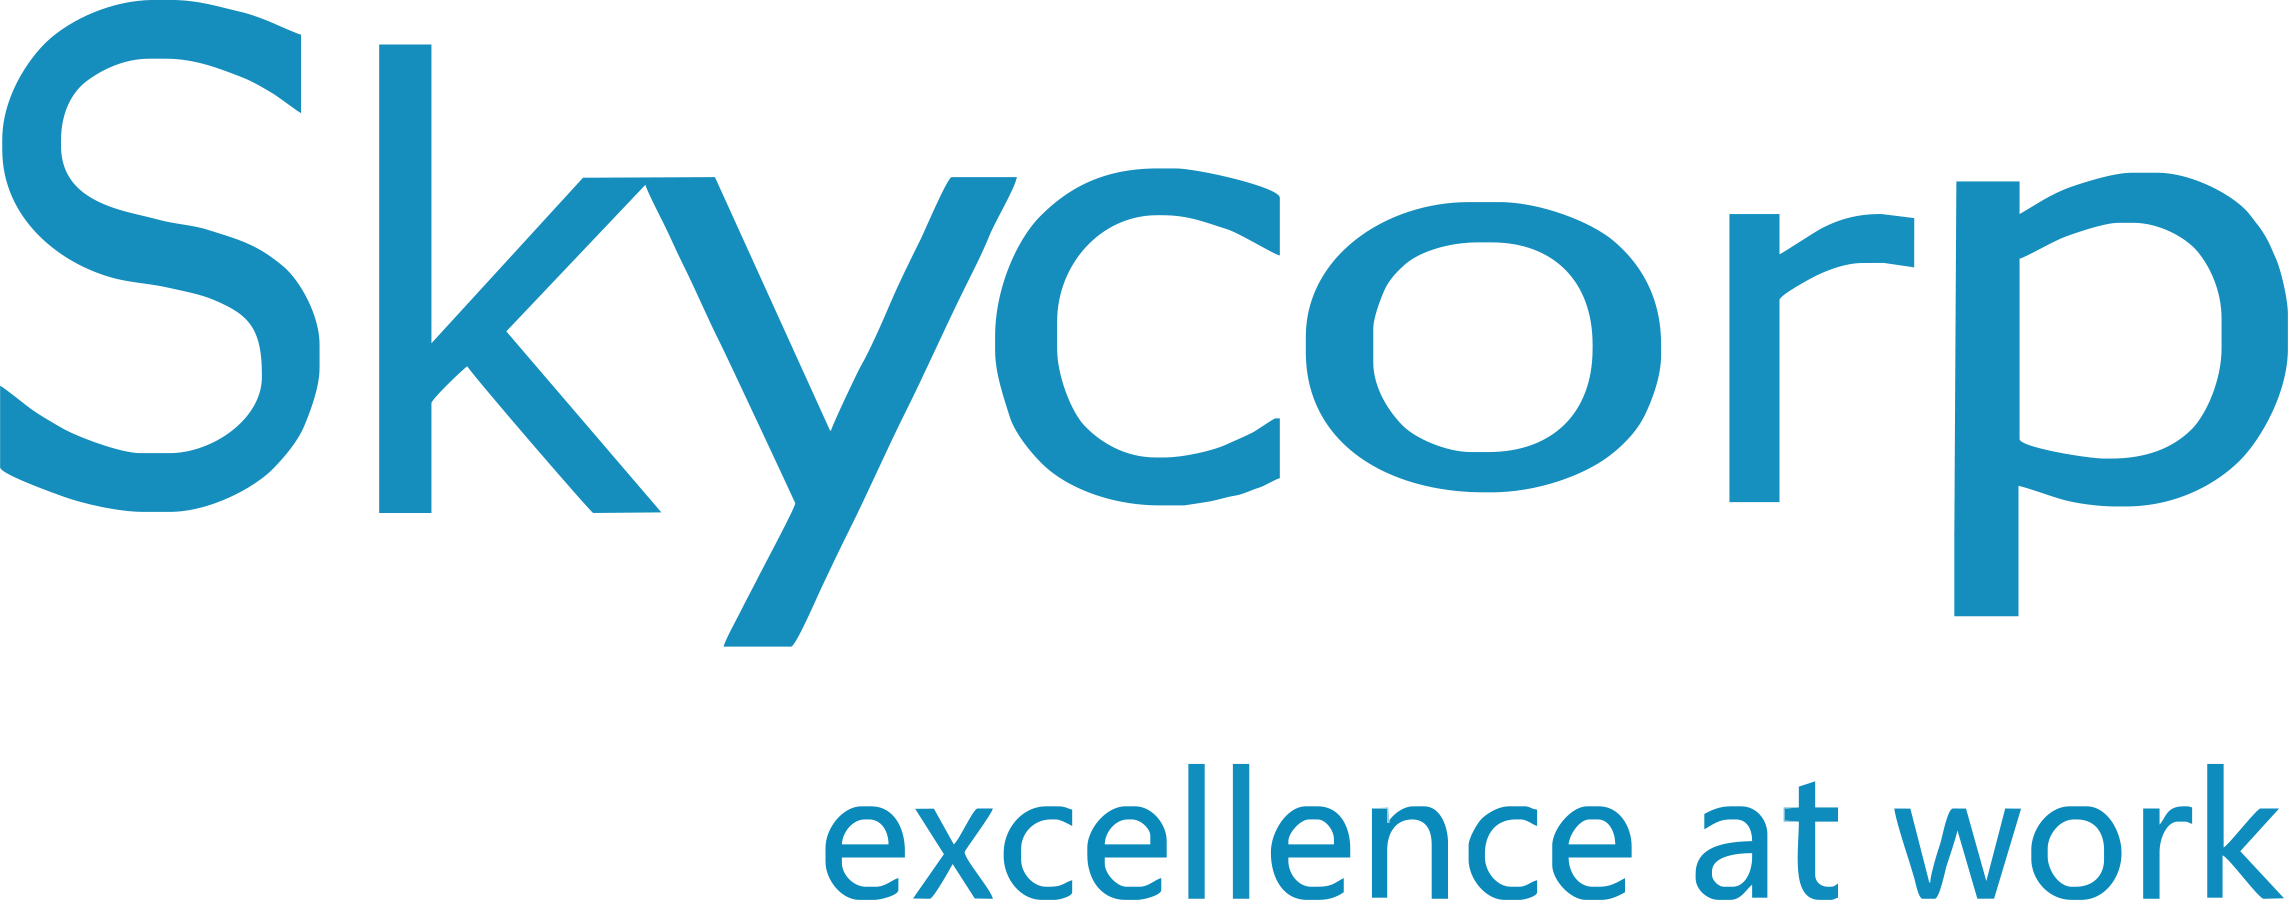 skycorp logo 无NB